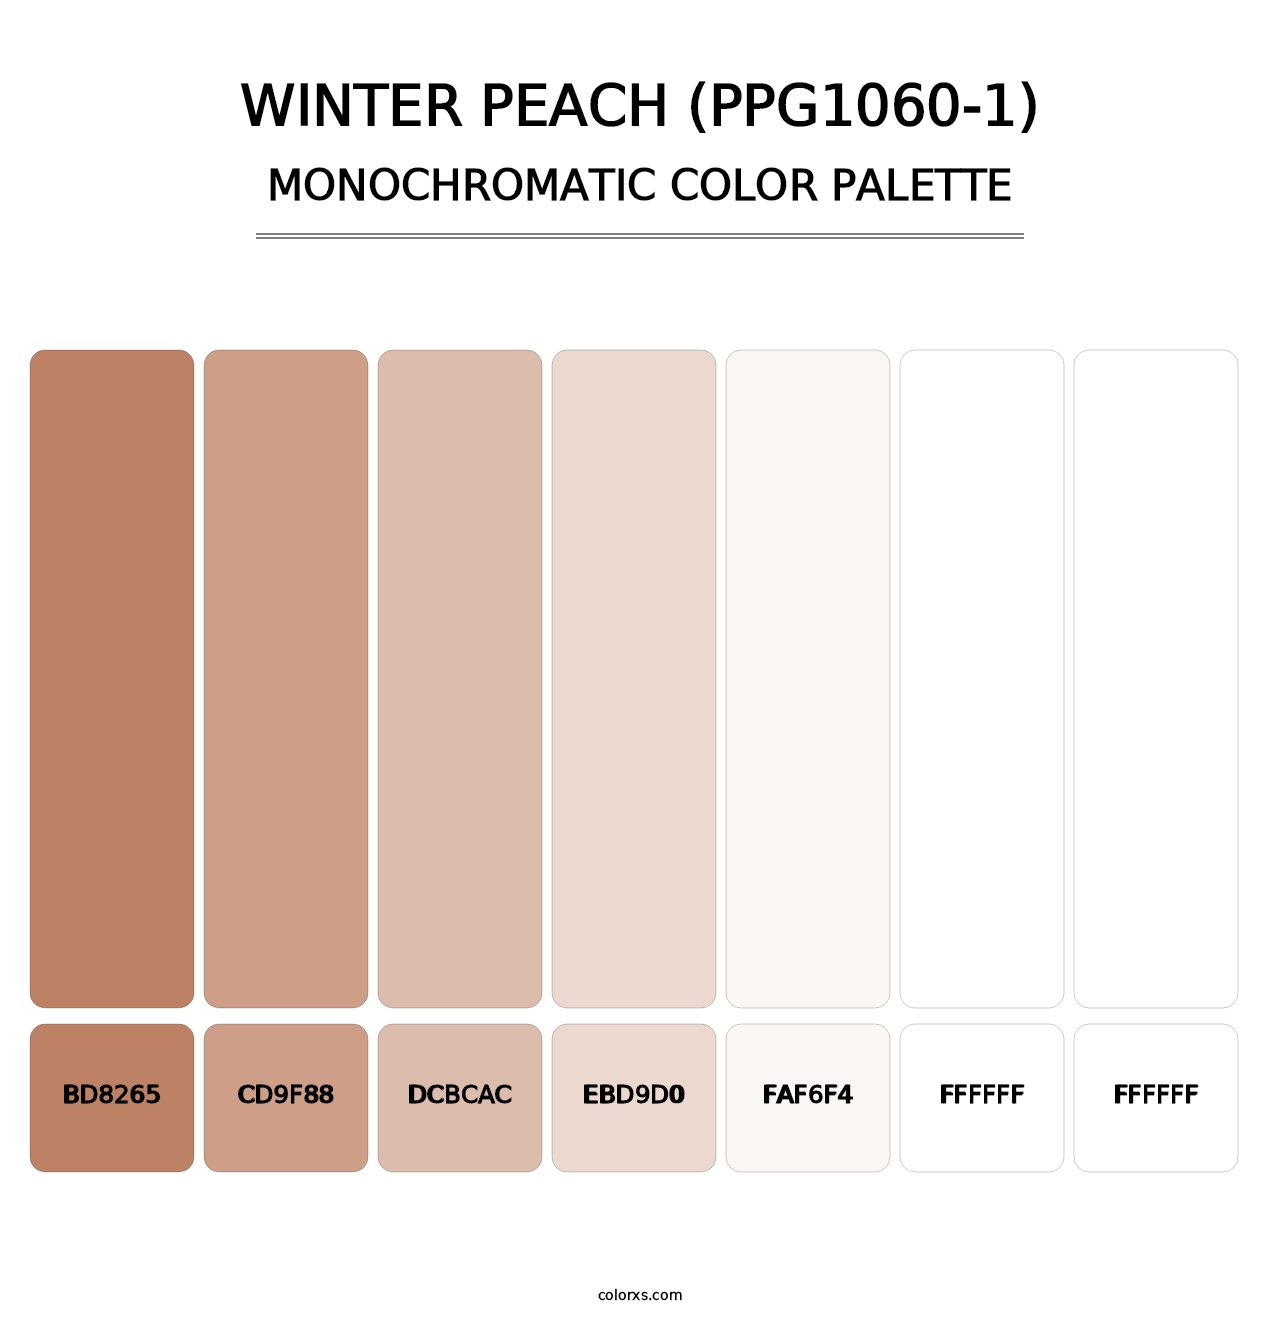 Winter Peach (PPG1060-1) - Monochromatic Color Palette